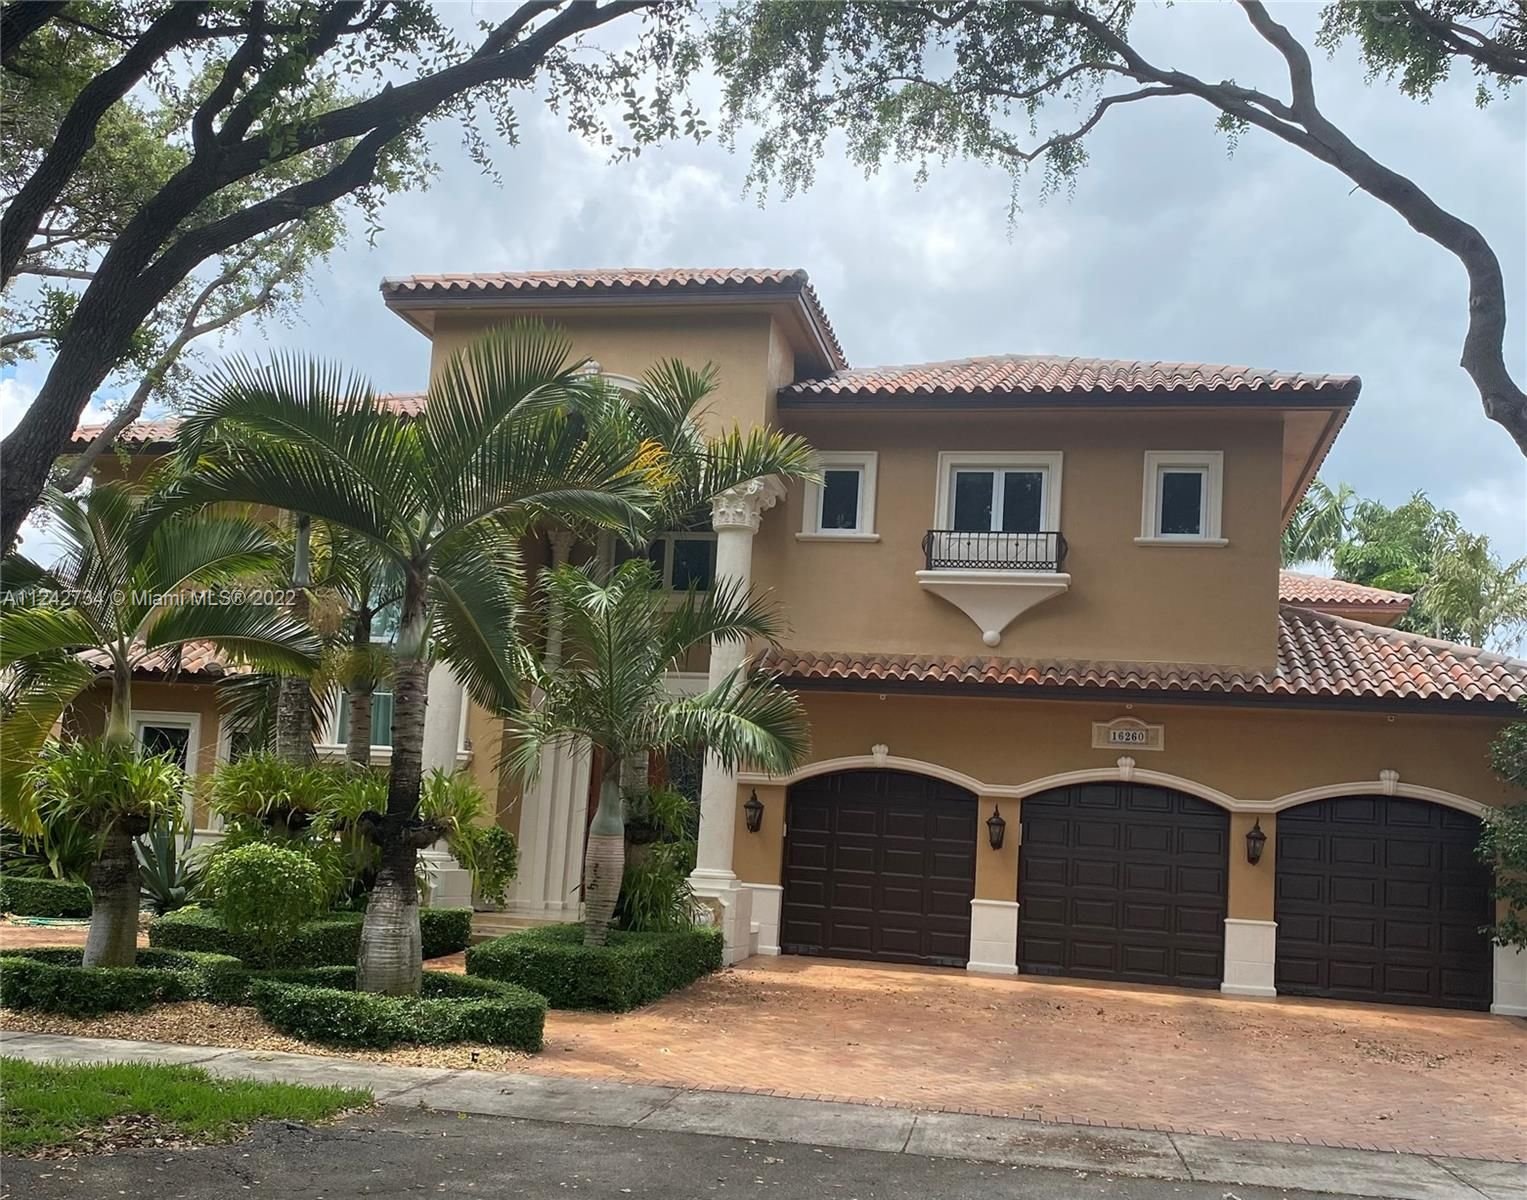 Real estate property located at 16260 84th Pl, Miami-Dade County, Miami Lakes, FL